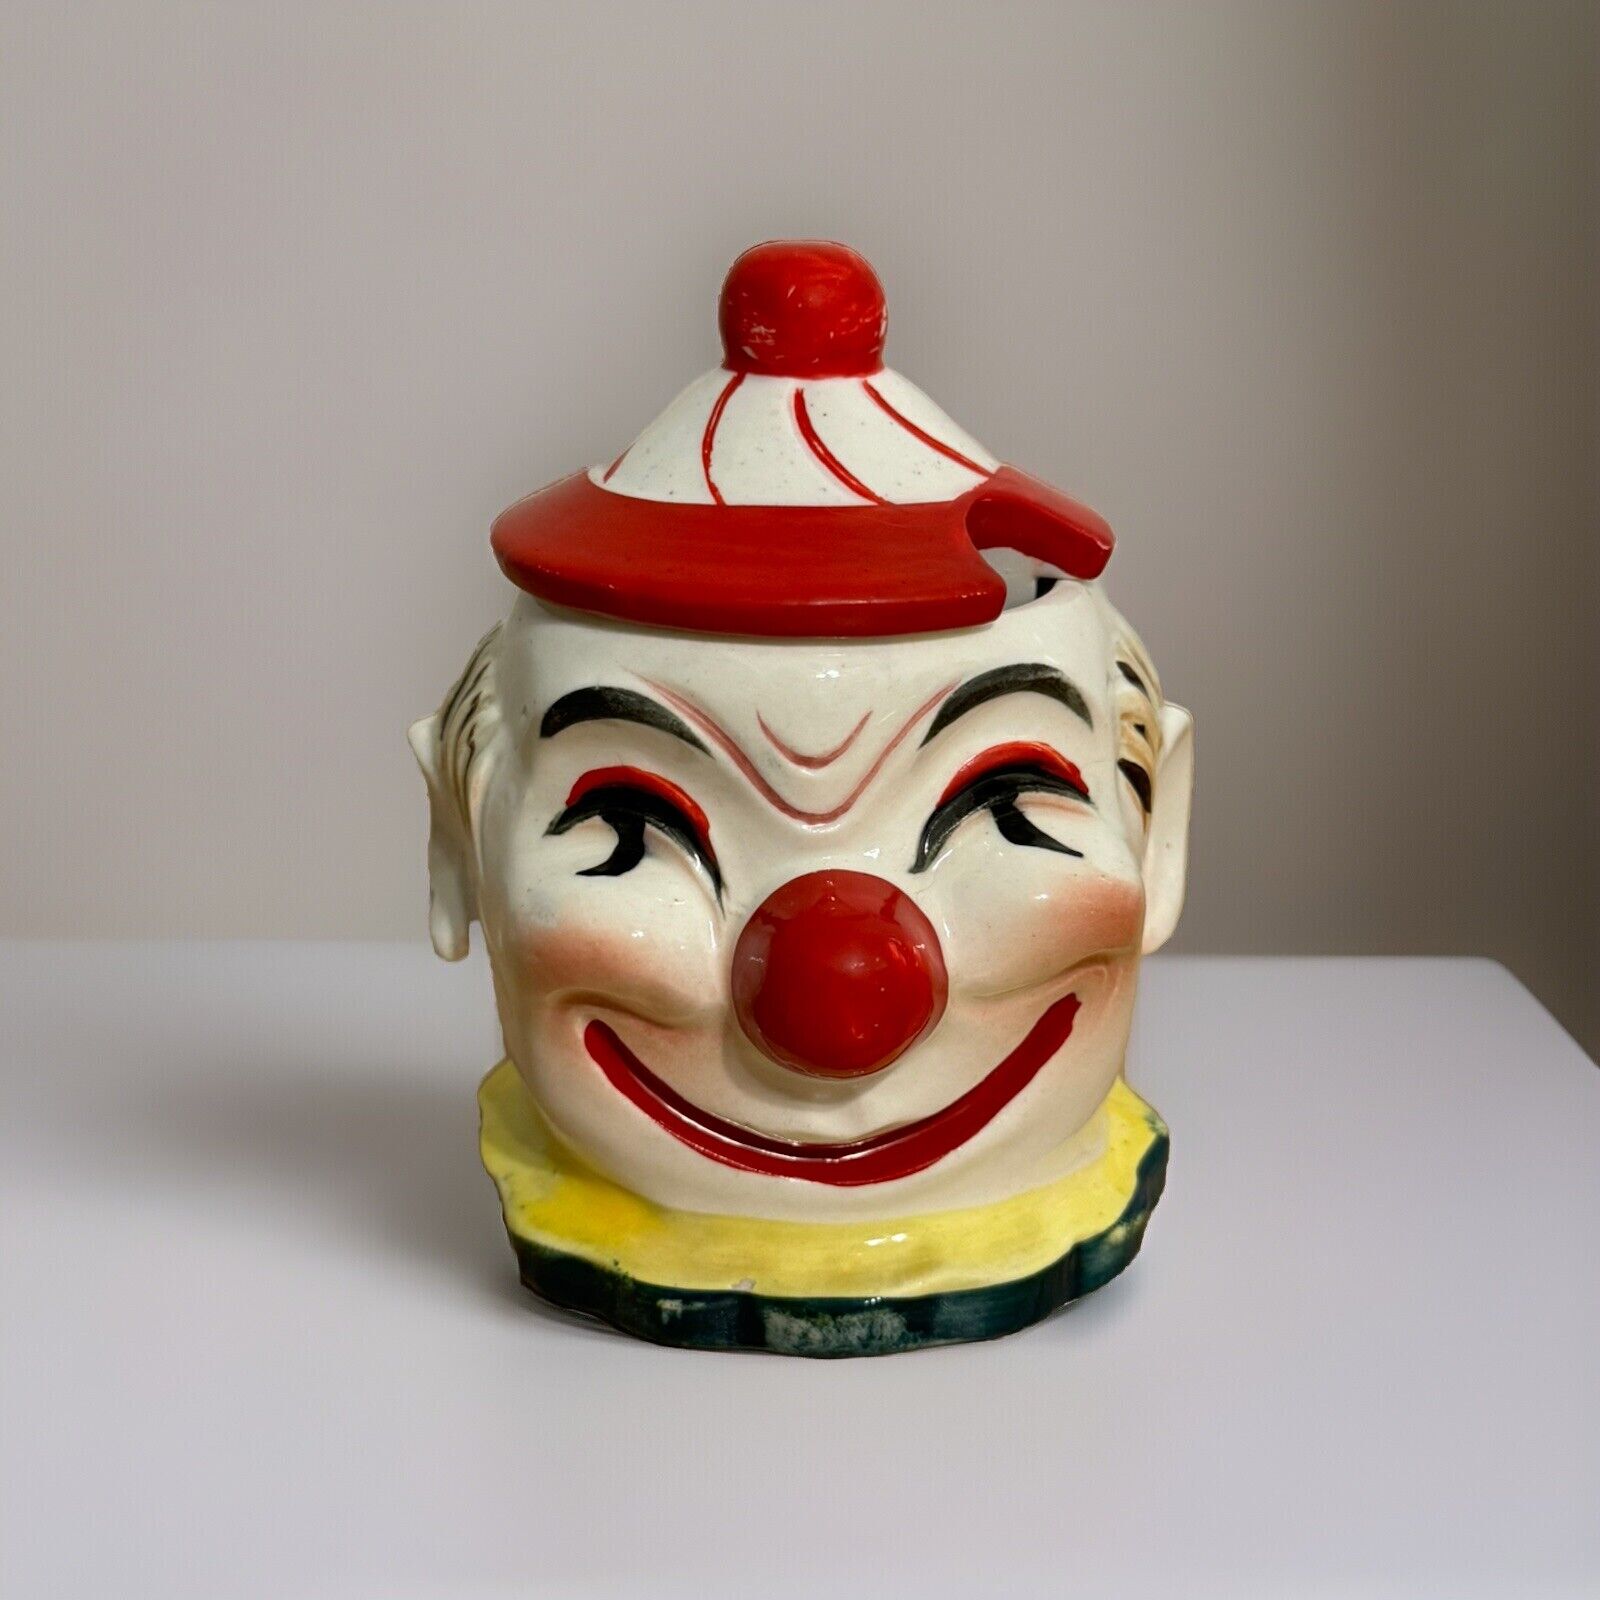 VTG RETRO 1950's-1960's Clown Condiment Jar Jam Jar - Marked Japan No Spoon 5x4